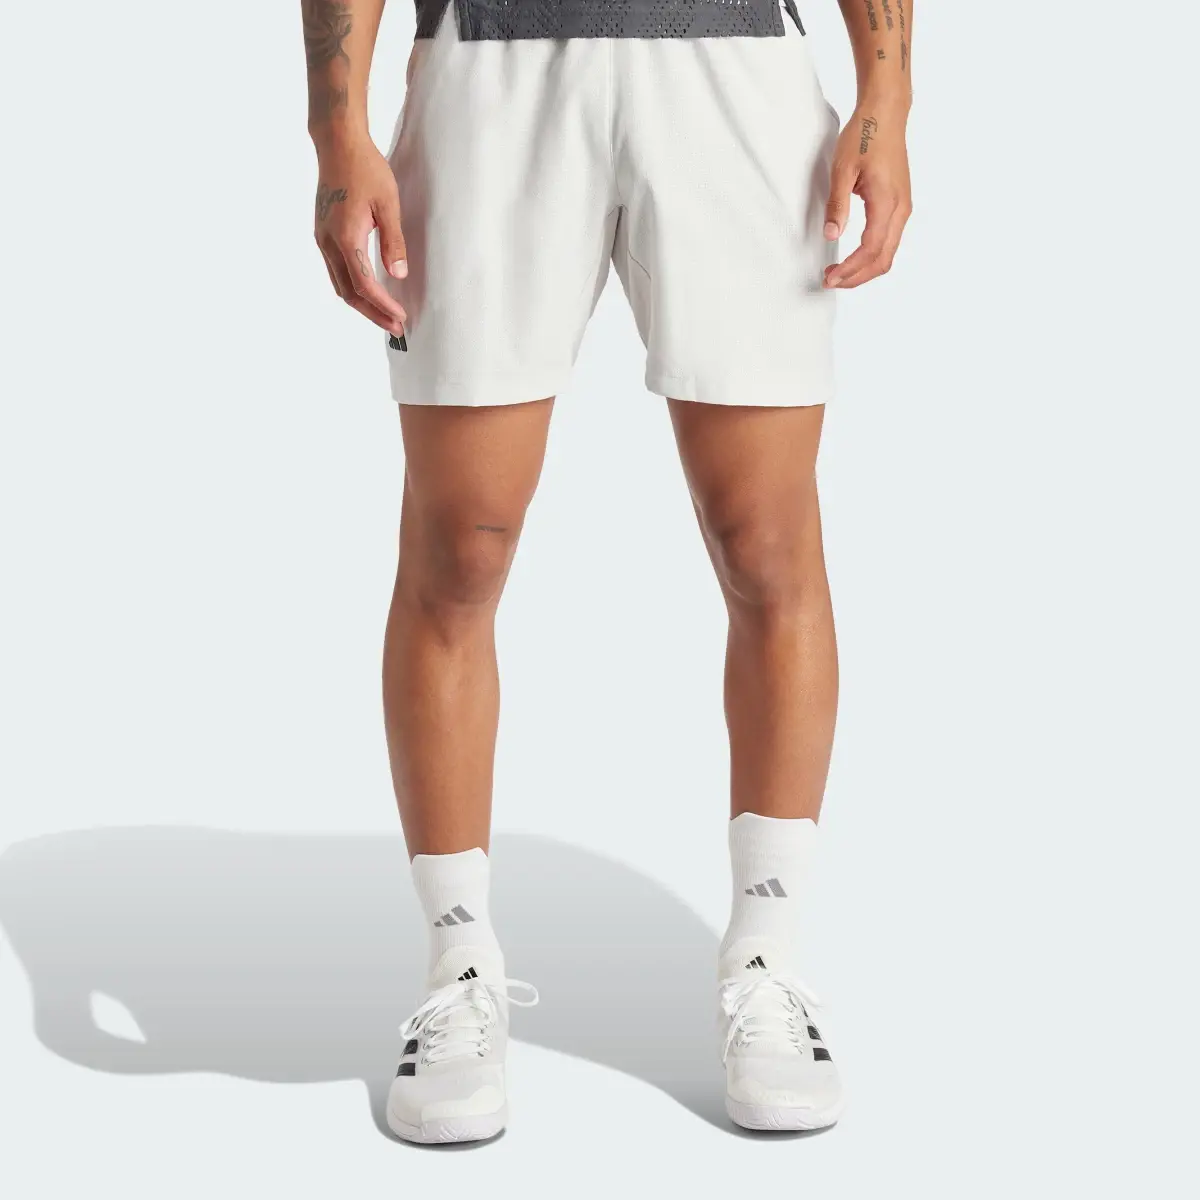 Adidas Tennis HEAT.RDY Shorts and Inner Shorts Set. 1